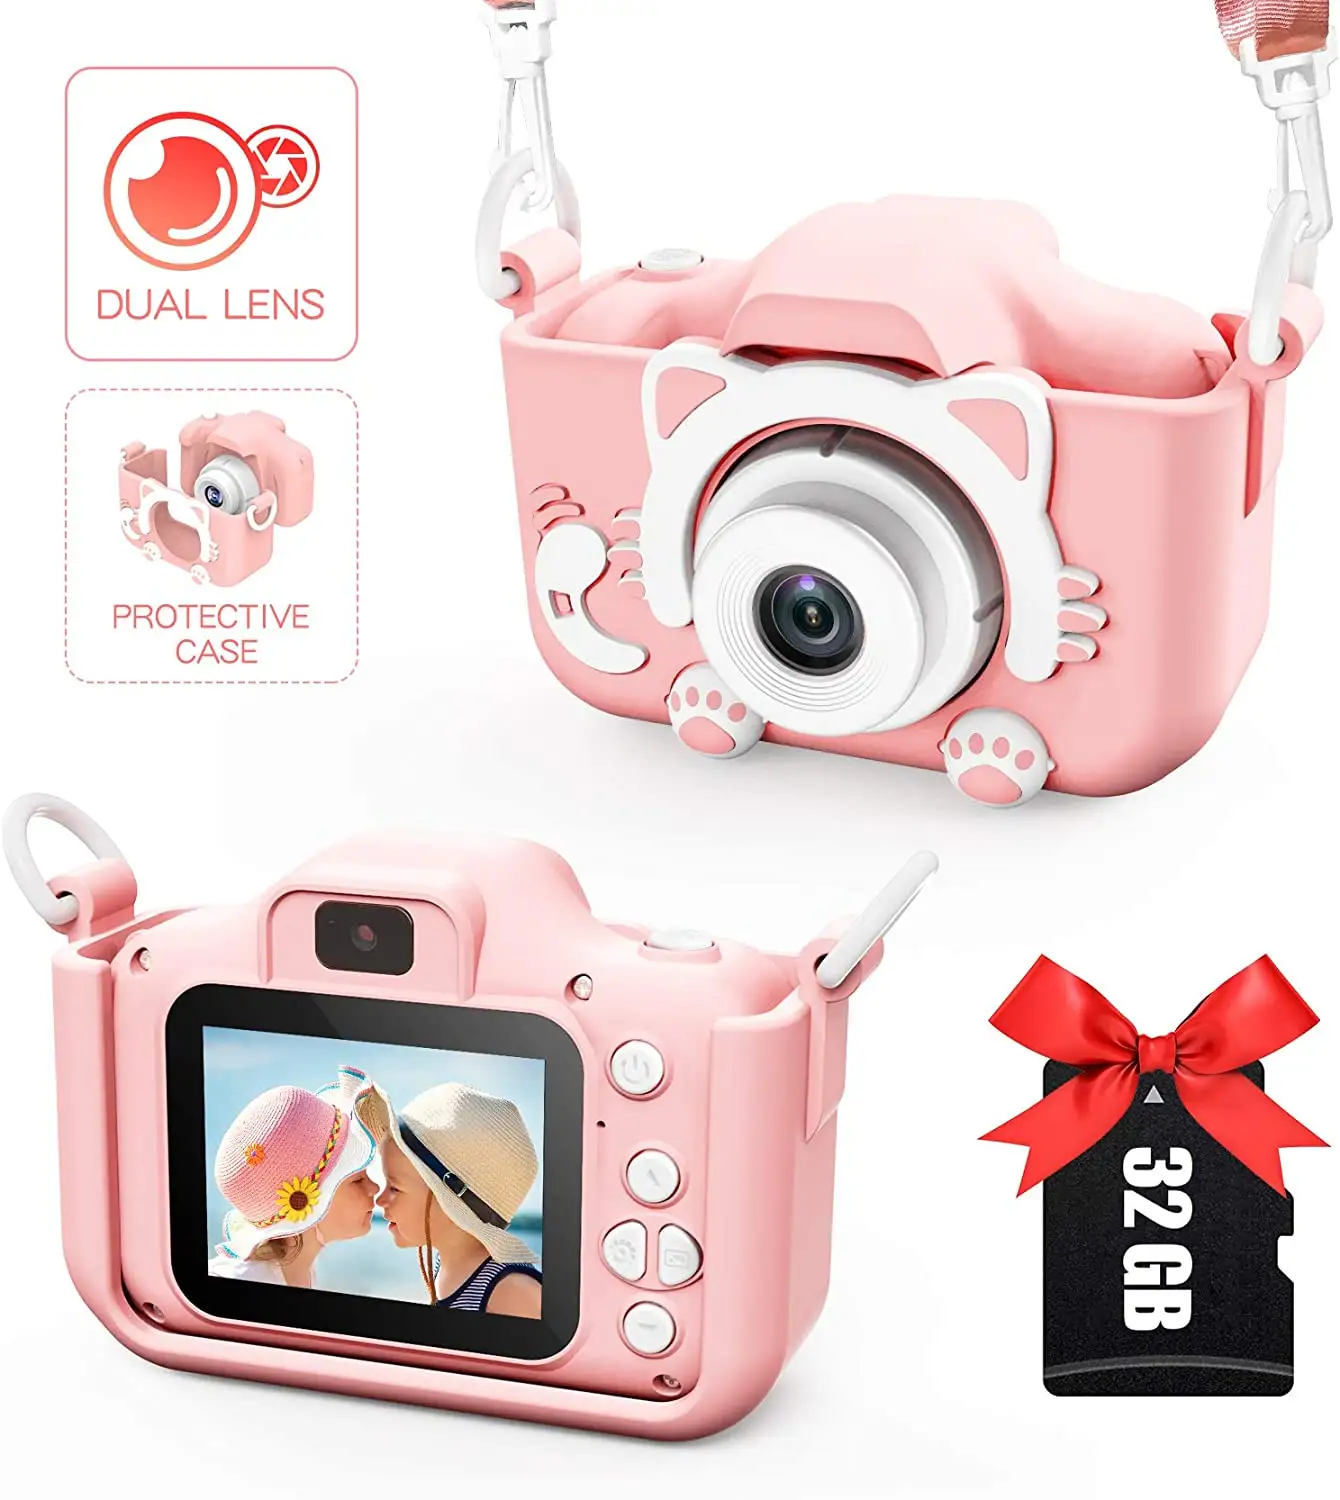 Mini Cute Cartoon 1080p 800 Million Digital Video Phone Kids Toy Camera for Gift Outdoor